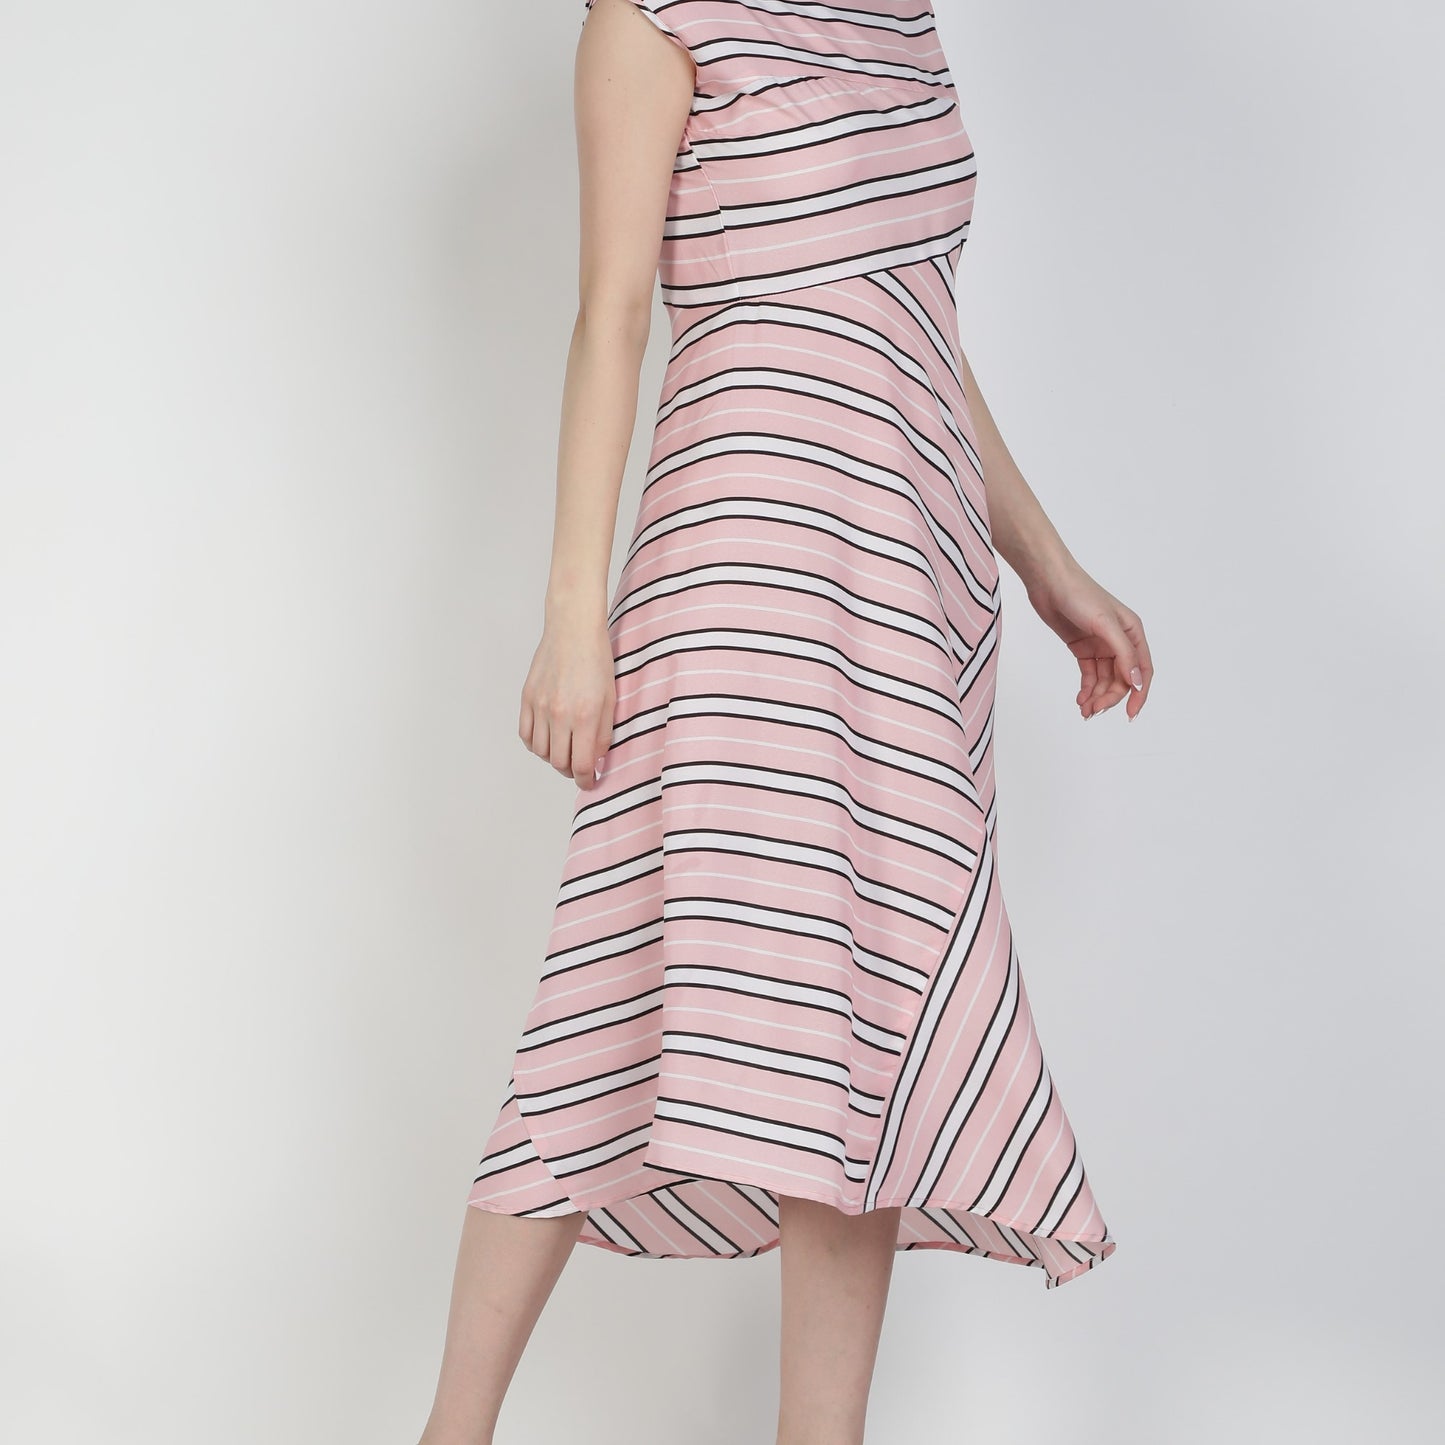 Celine Dress Pink and White Stripes